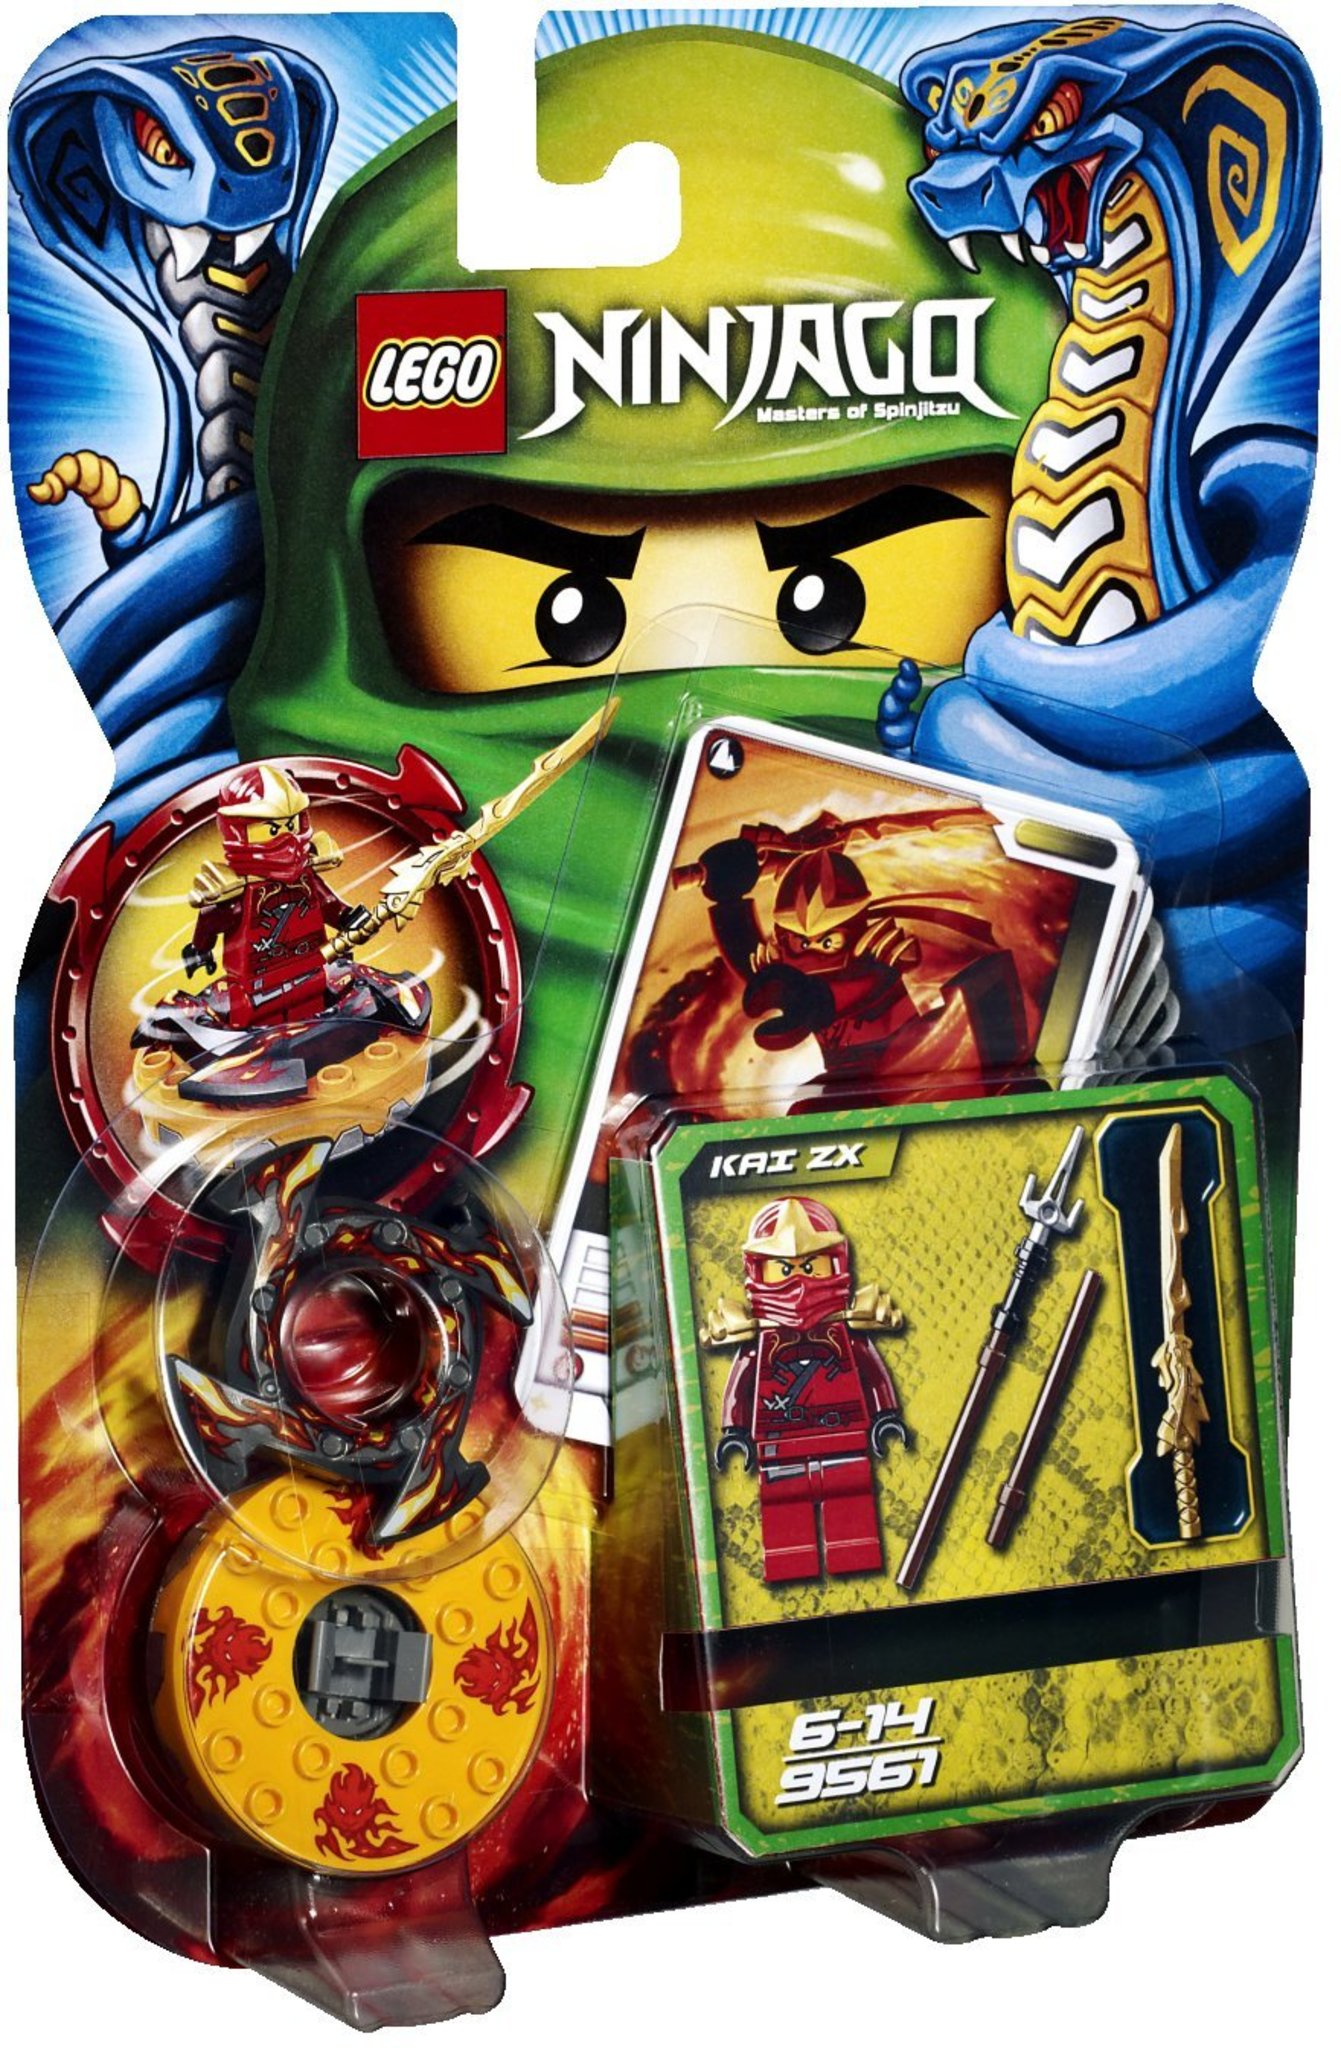 LEGO Ninjago 9561 - Kai ZX | Mattonito